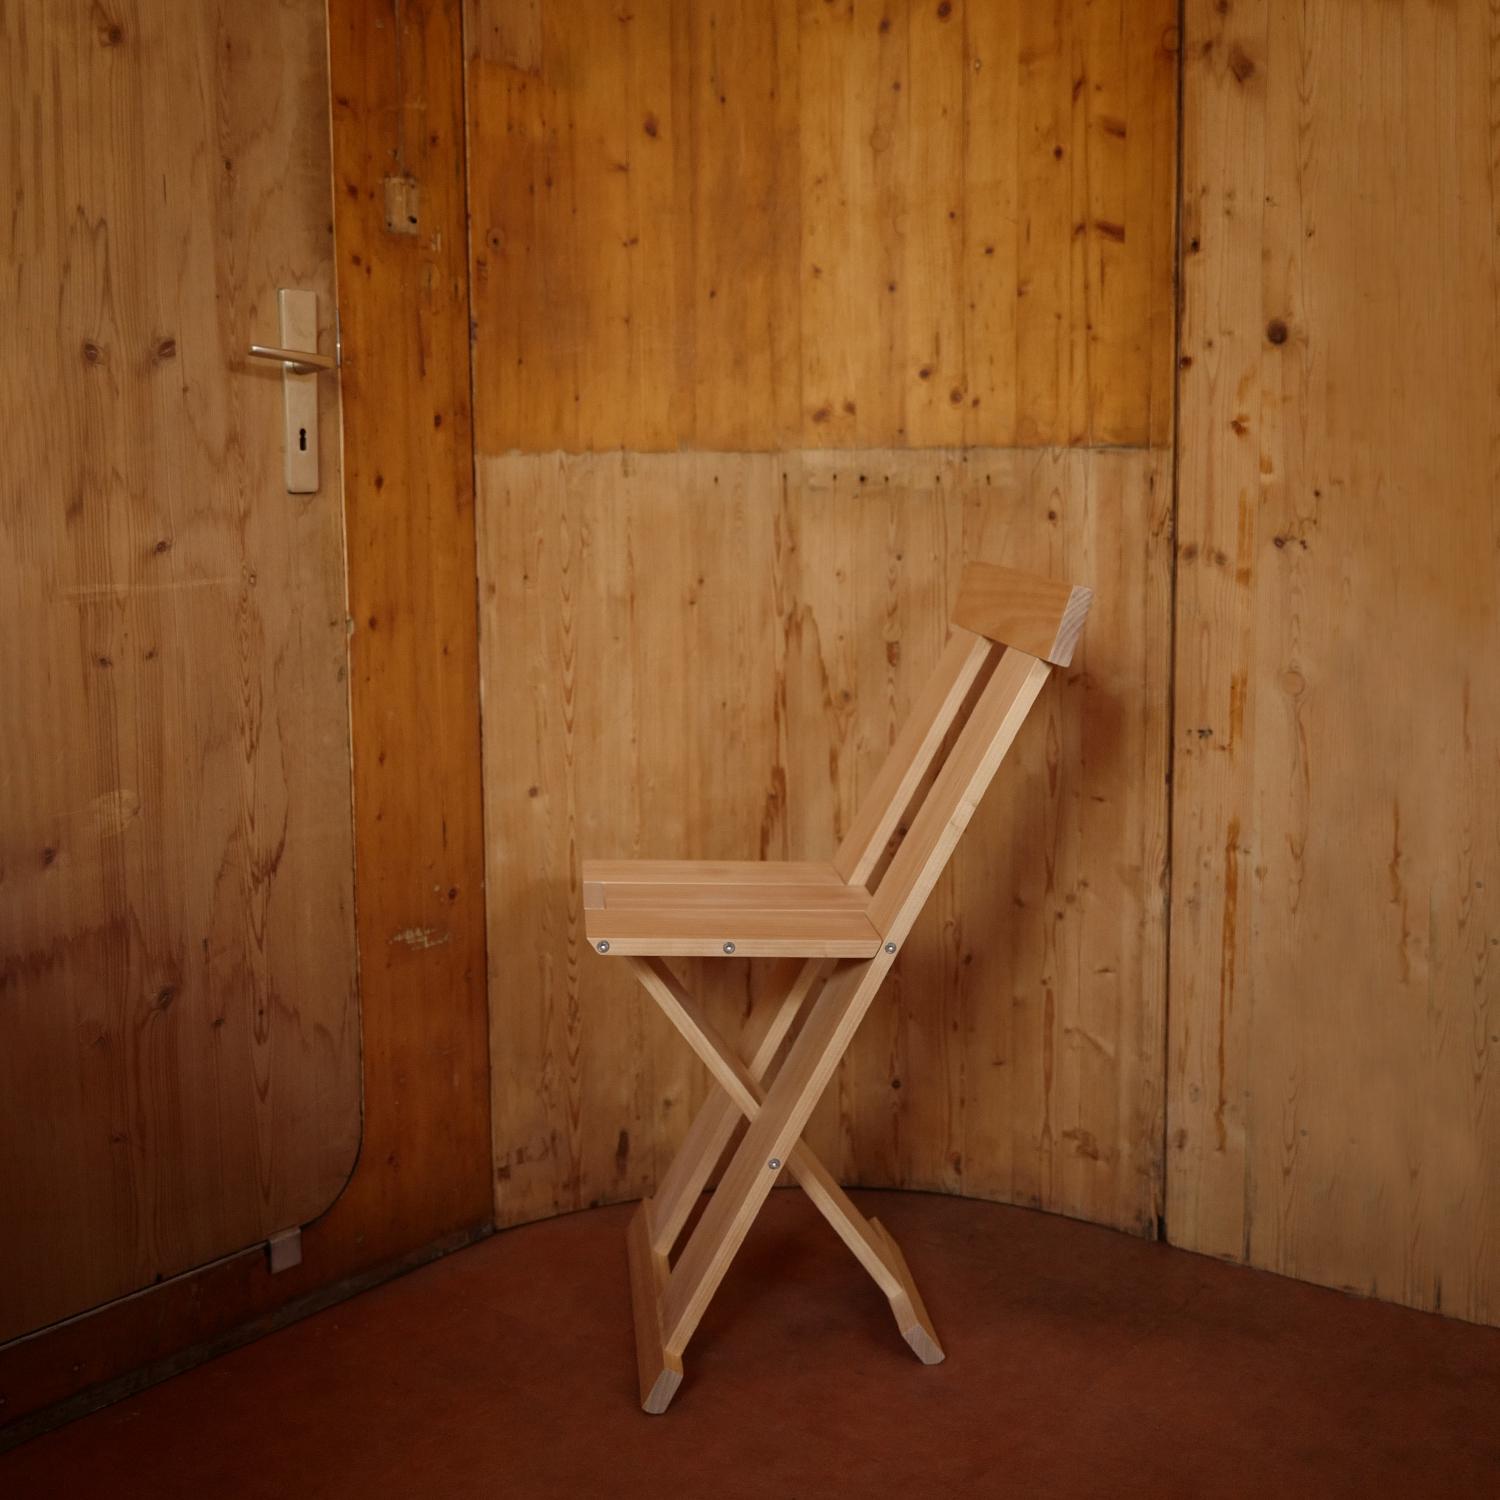 Design：Lina Bo Bardi, Marcelo Ferraz, Marcelo Suzuki
Material：Solid Pine

This chair was designed by Lina Bo Baldi, Marcelo Ferras, and Marcelo Suzuki for the Teatro Gregório de Mattos in Salvador, Brazil. 